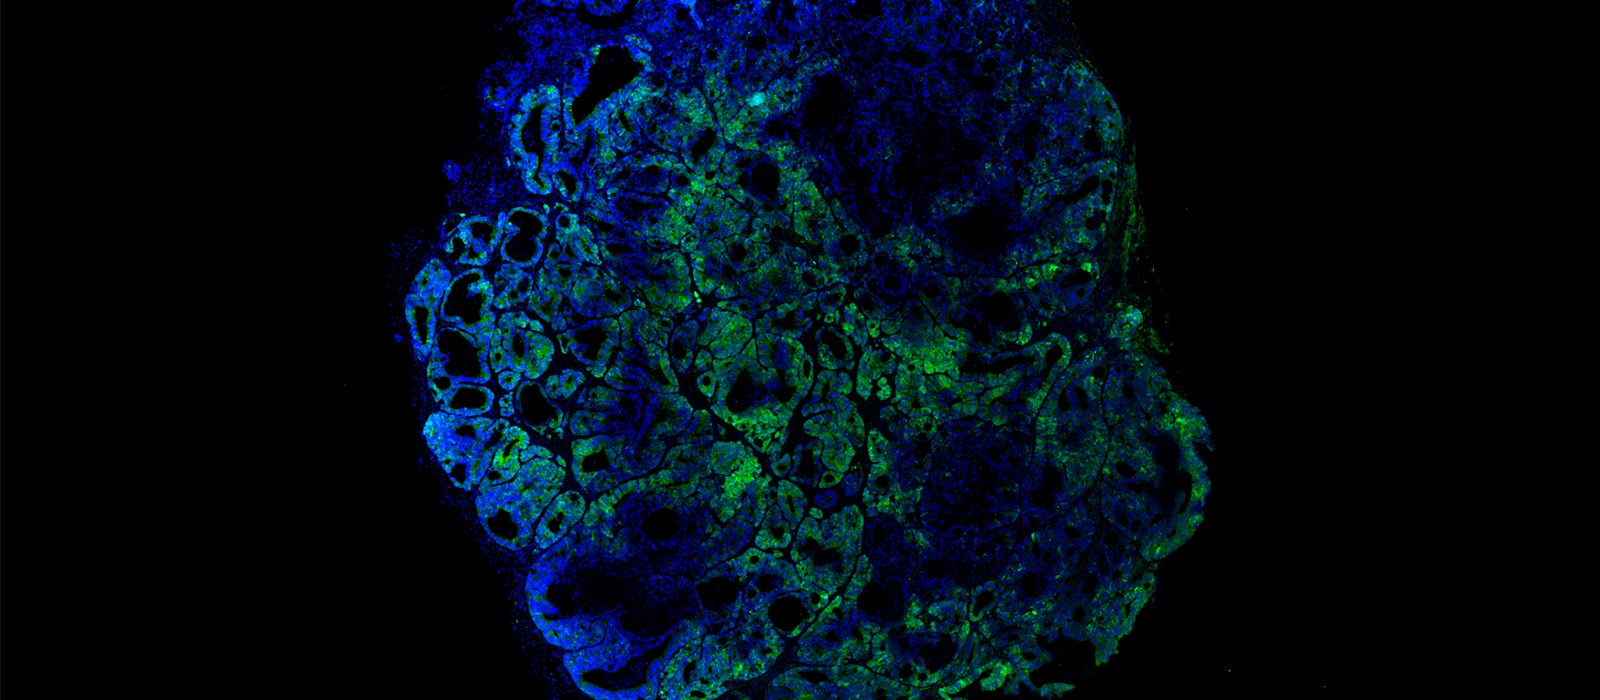 Celulas madre tumorales de colon. IRBBarcelona